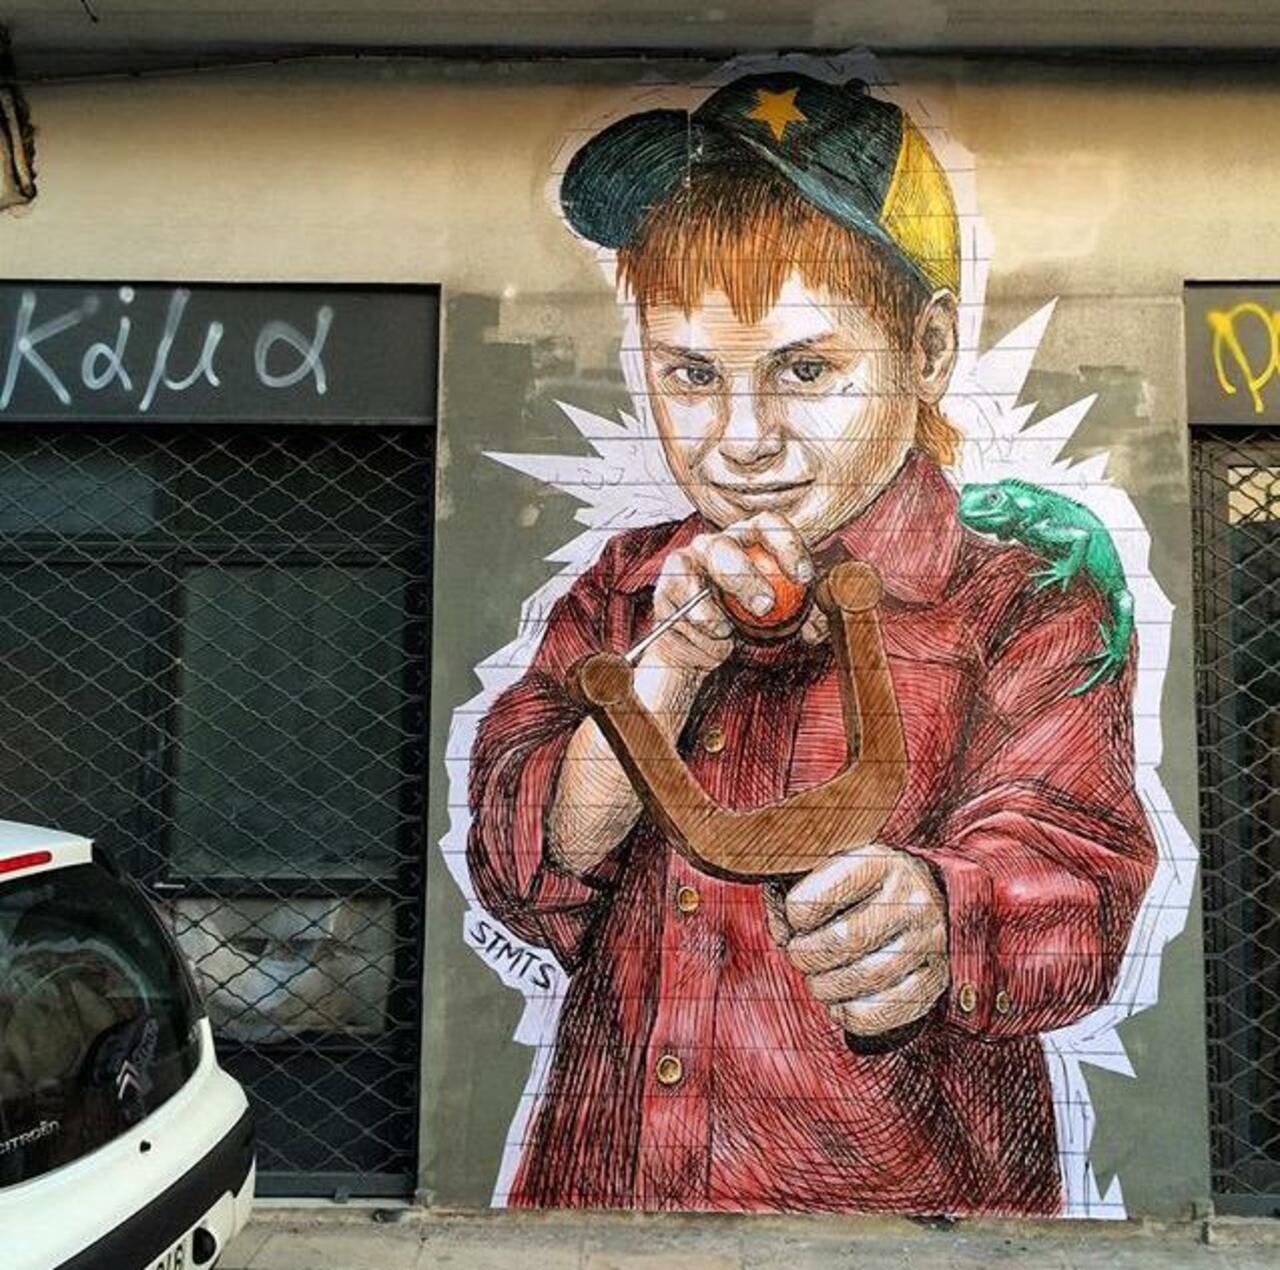 Street Art by STMTS in Athens

#art #graffiti #mural #streetart http://t.co/n2vEit6YFa